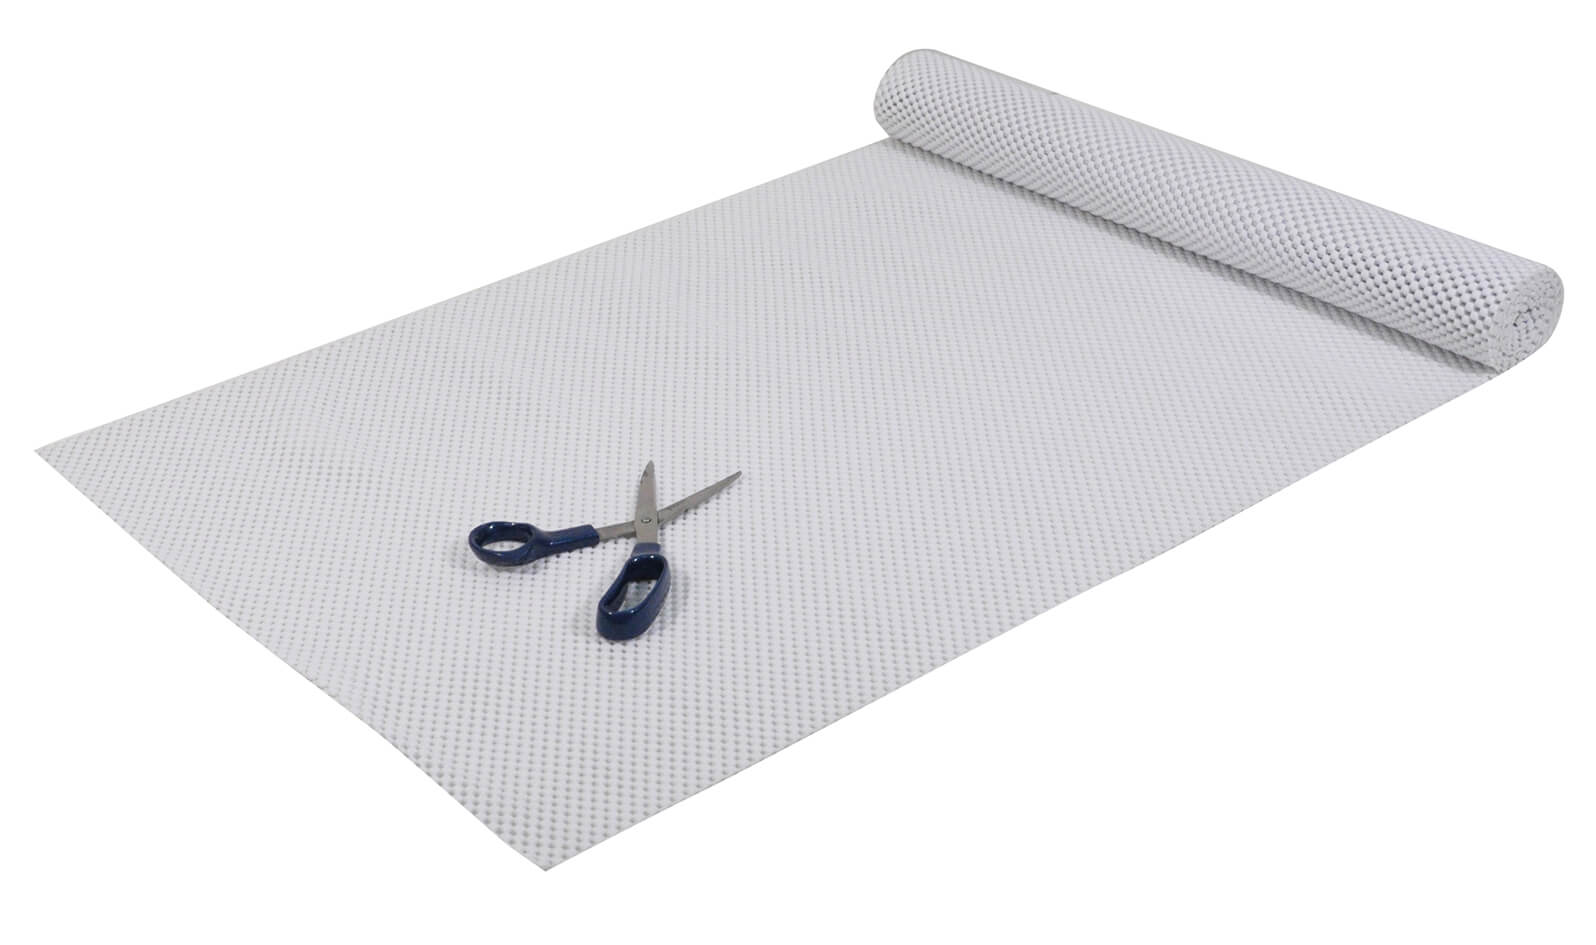 White non-slip fabric